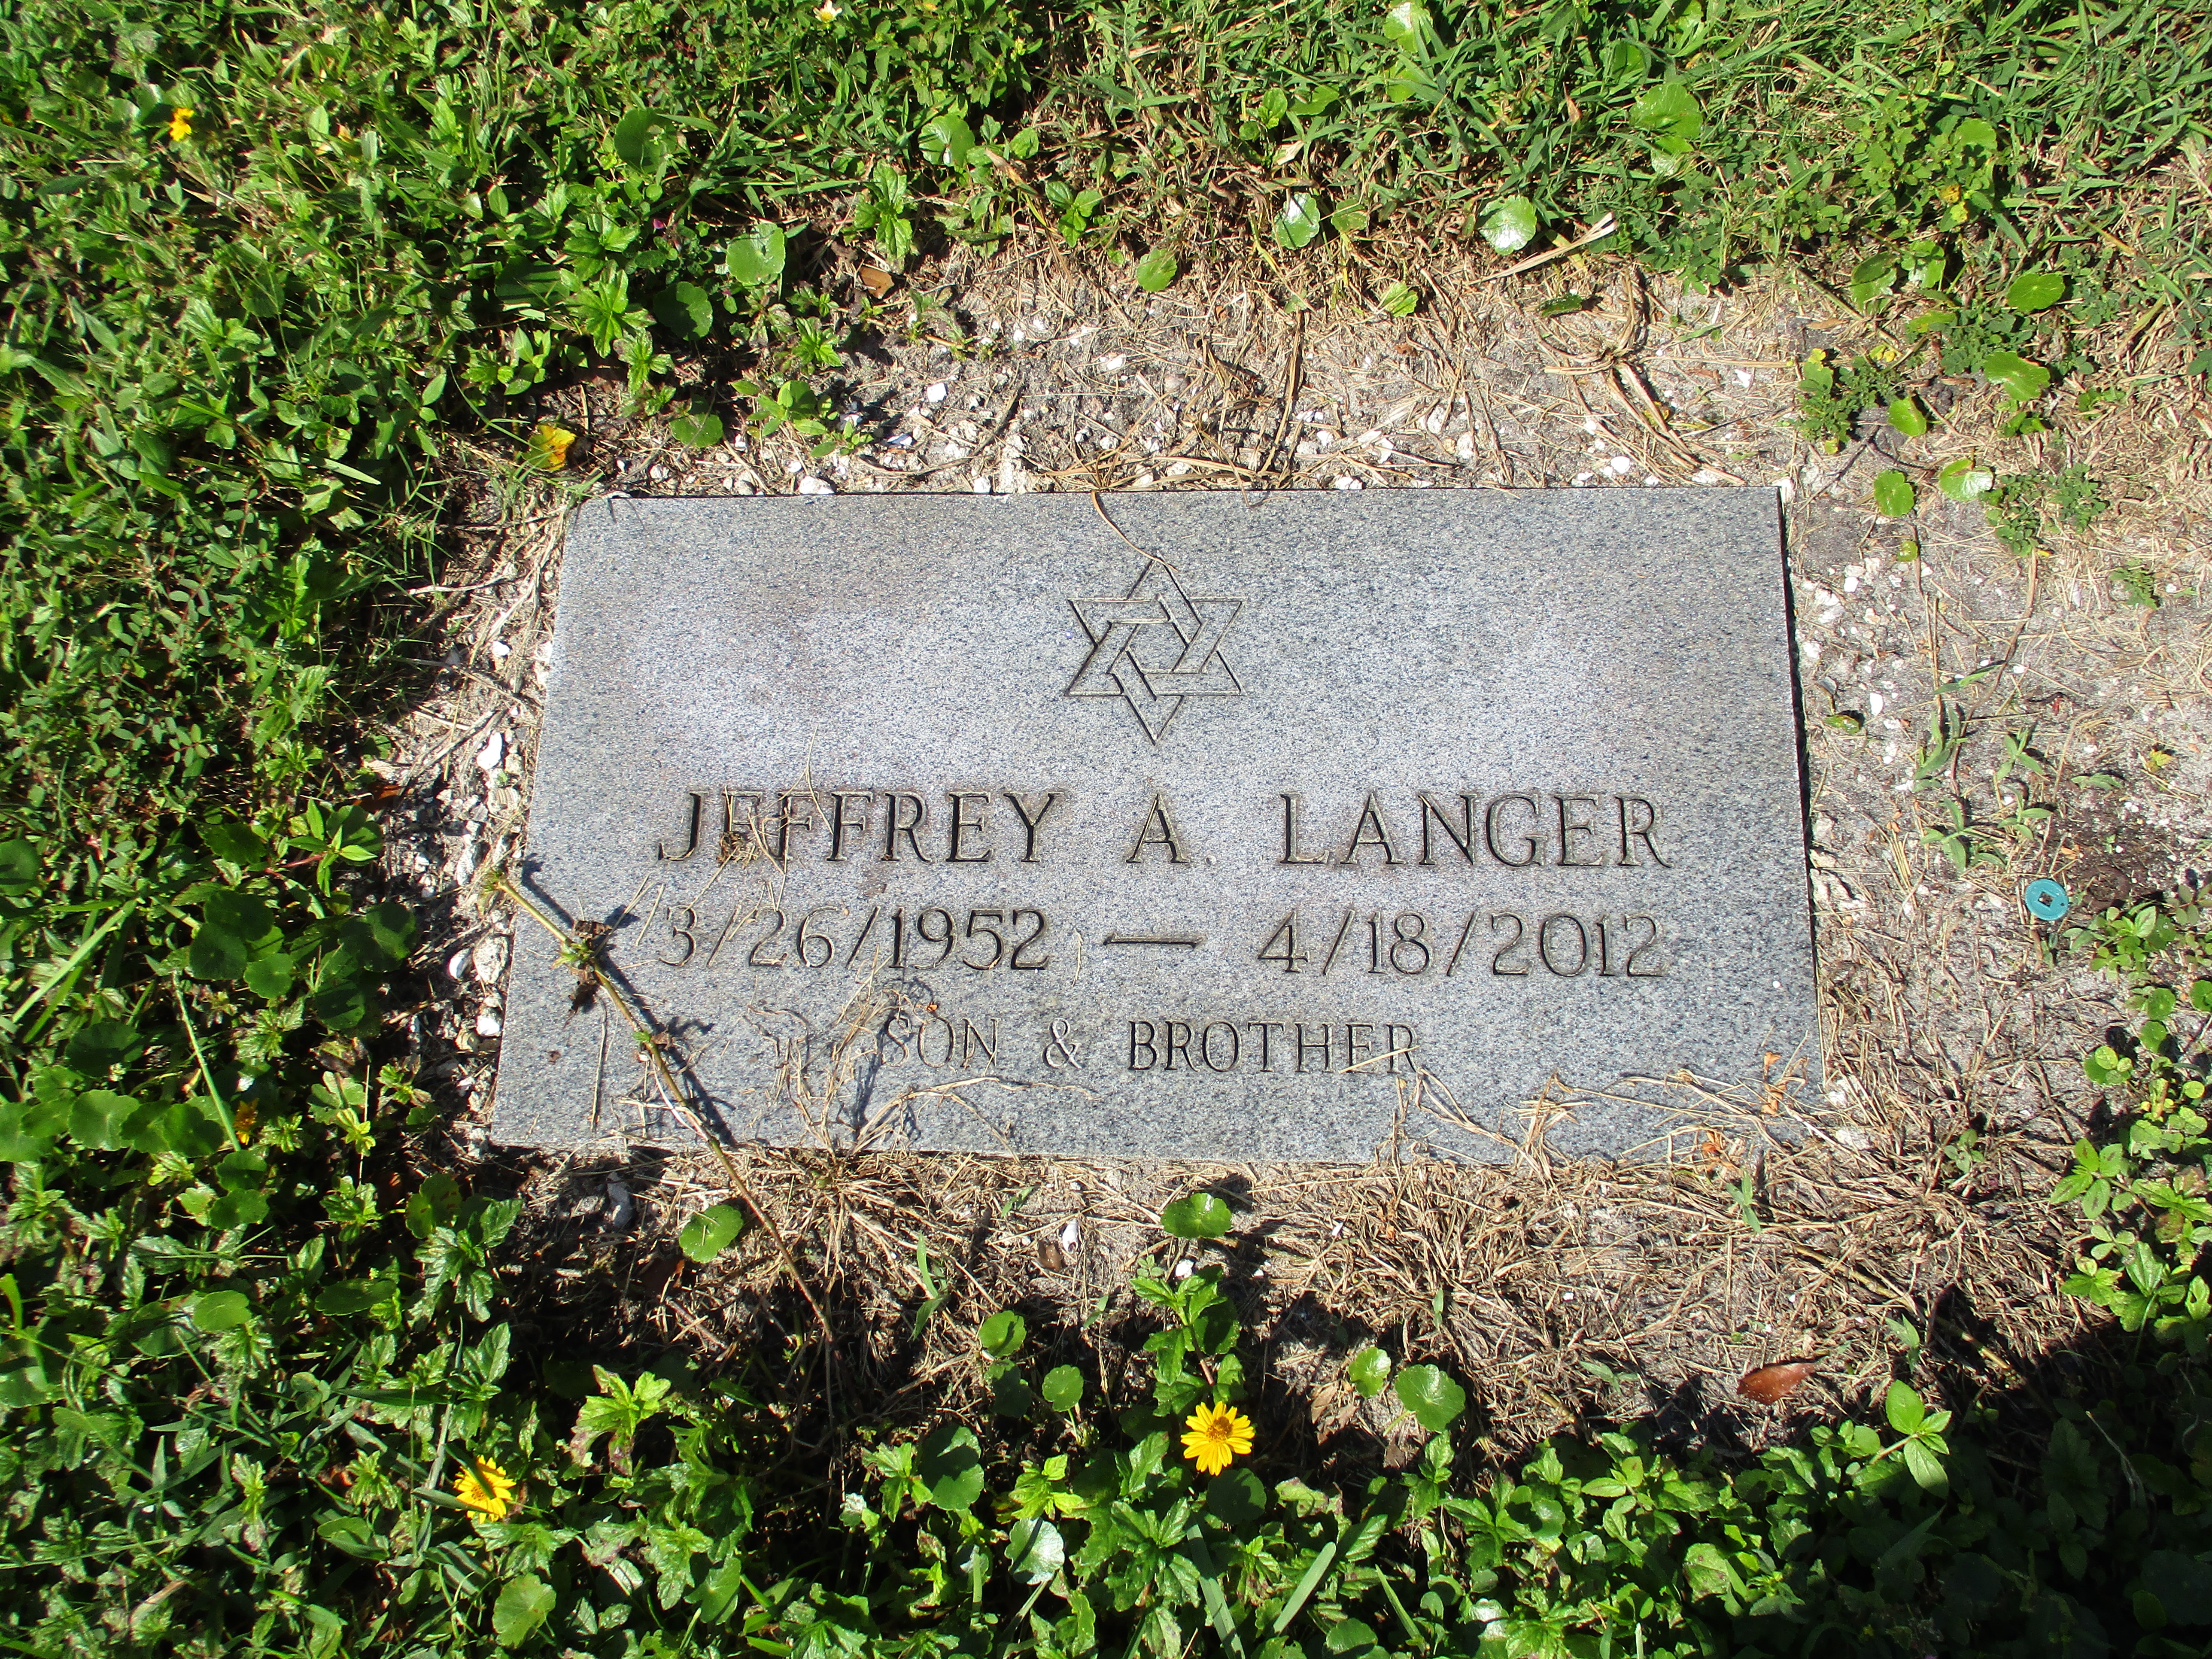 Jeffrey A Langer